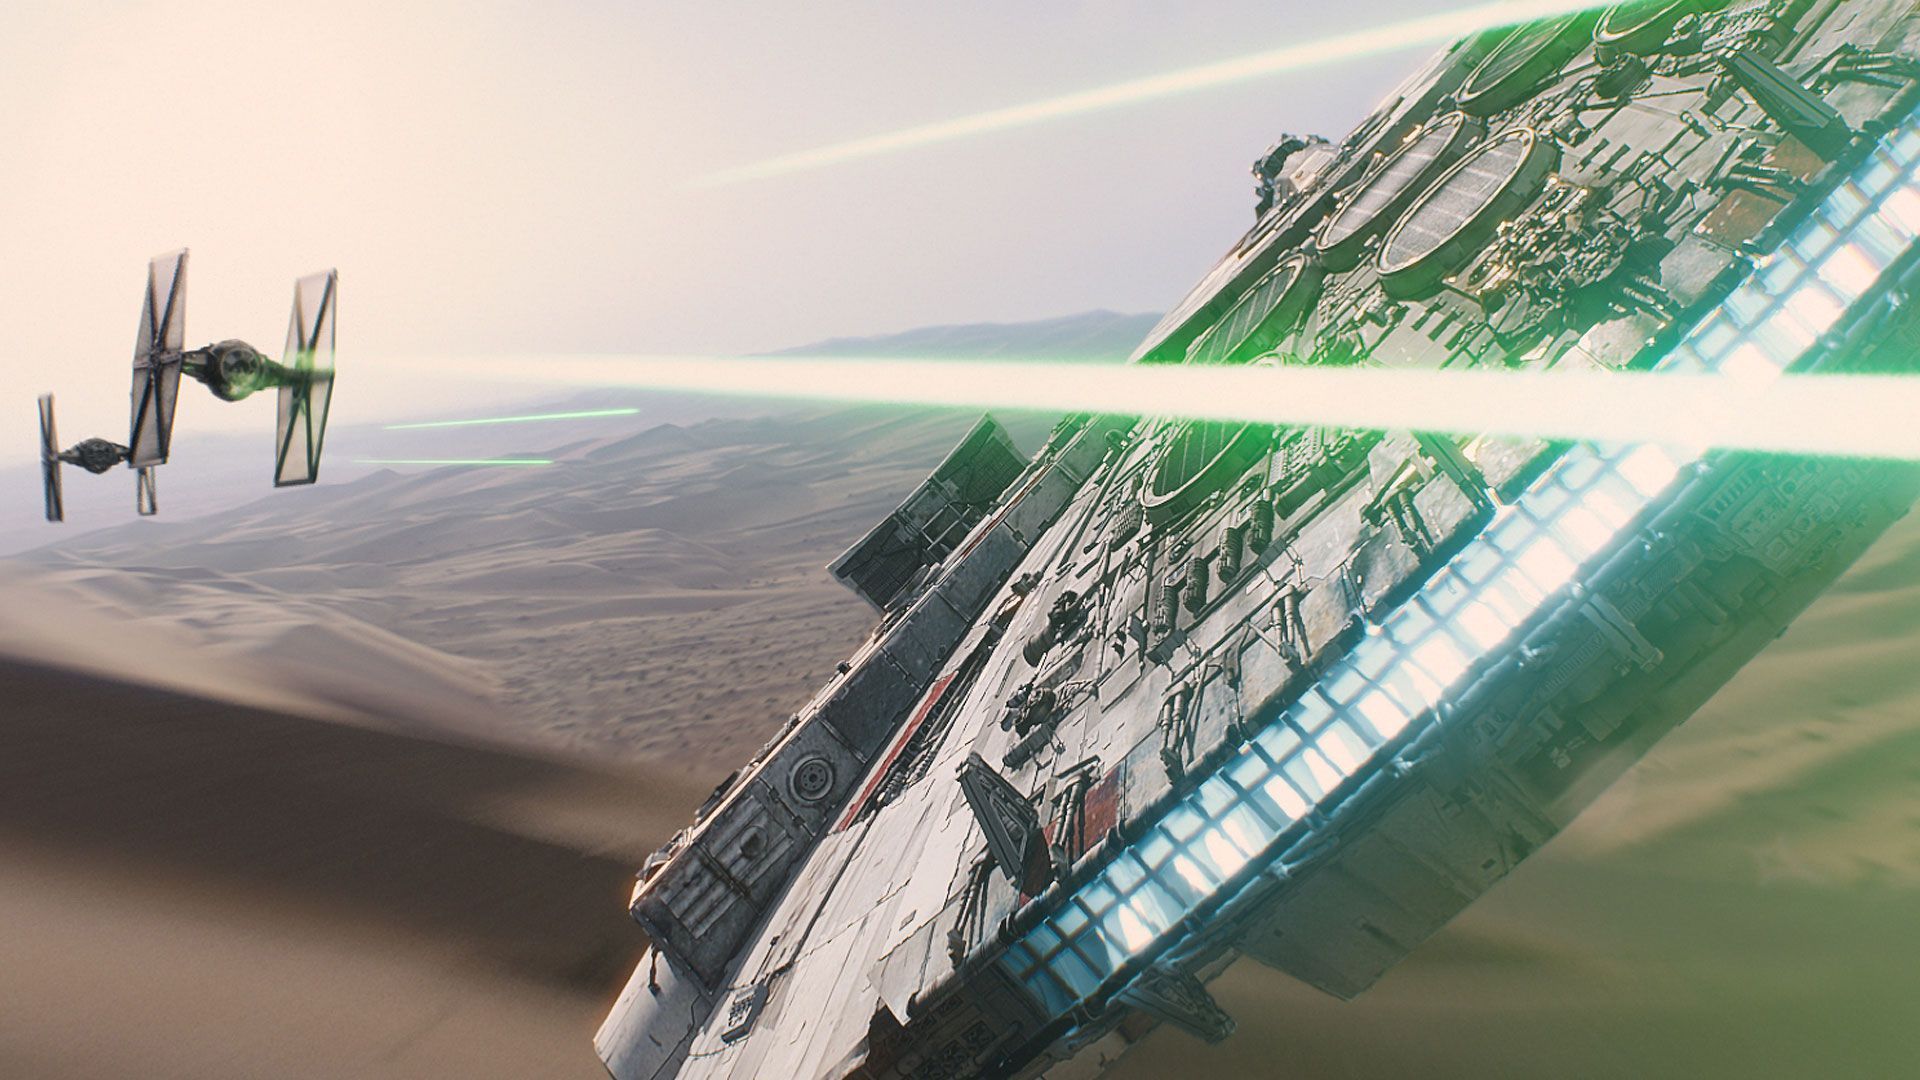 Star Wars The Force Awakens HD images released by Disney - SlashGear